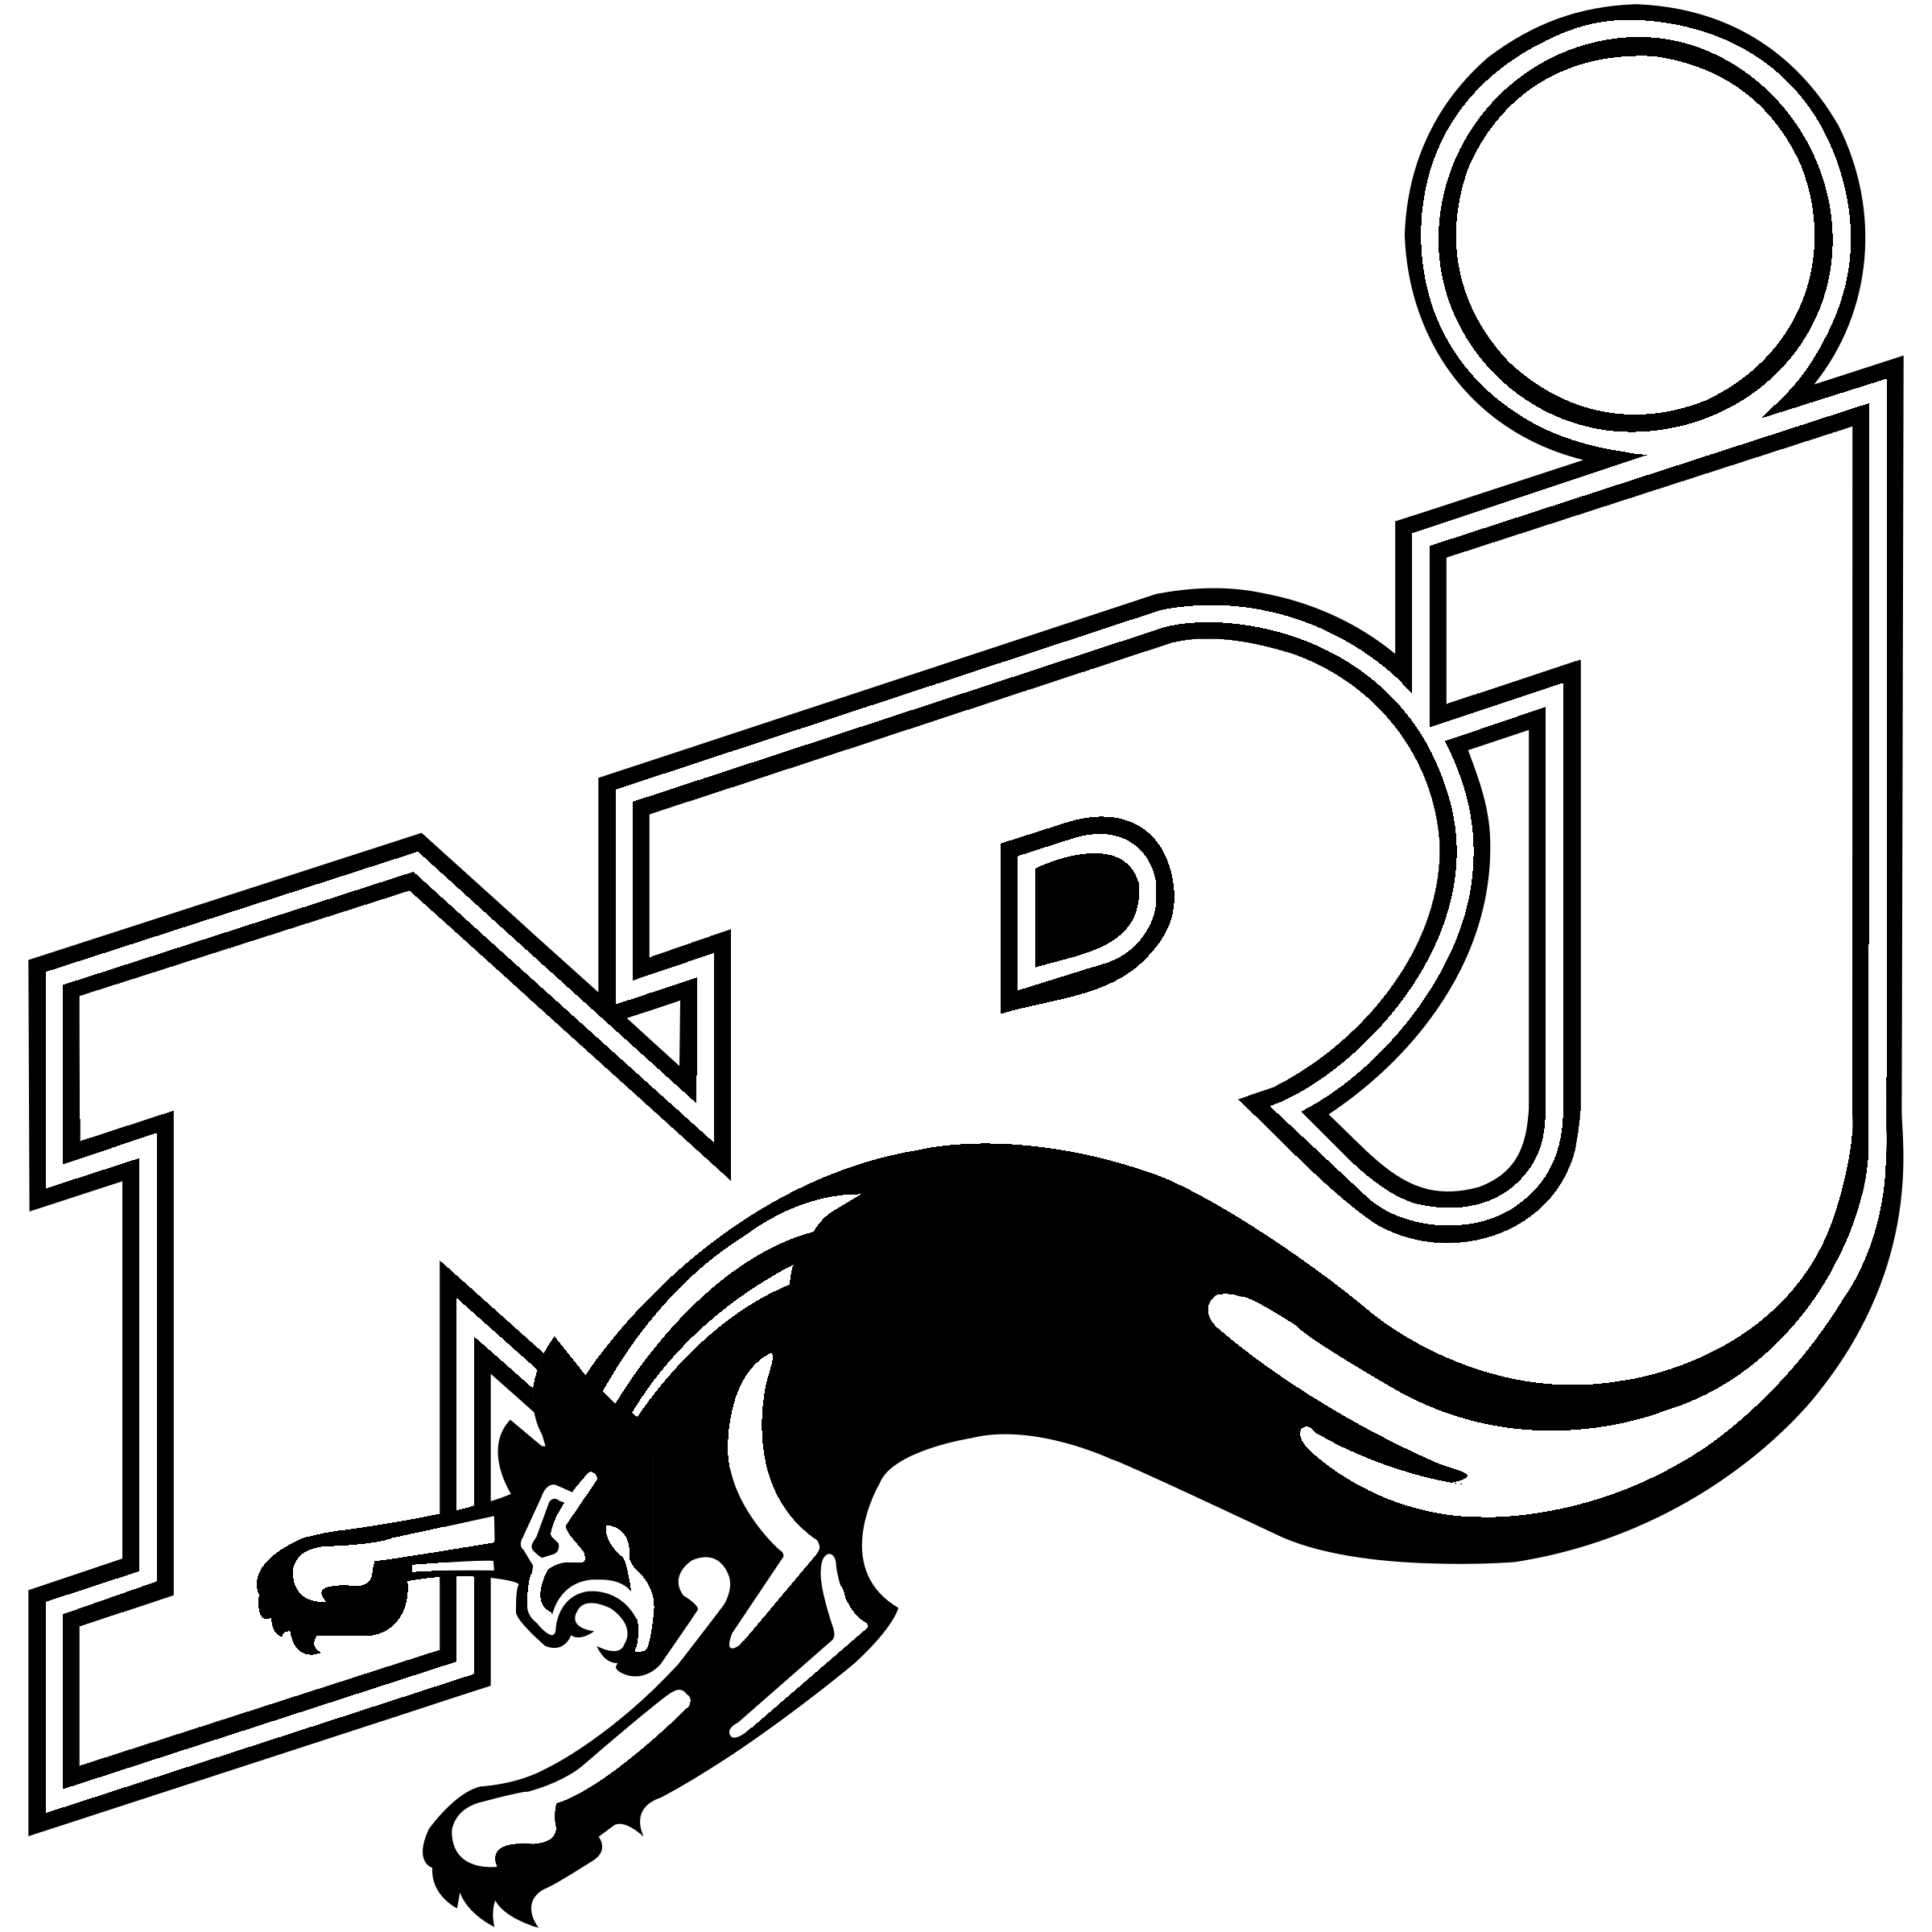 nrj-1-logo-black-and-white